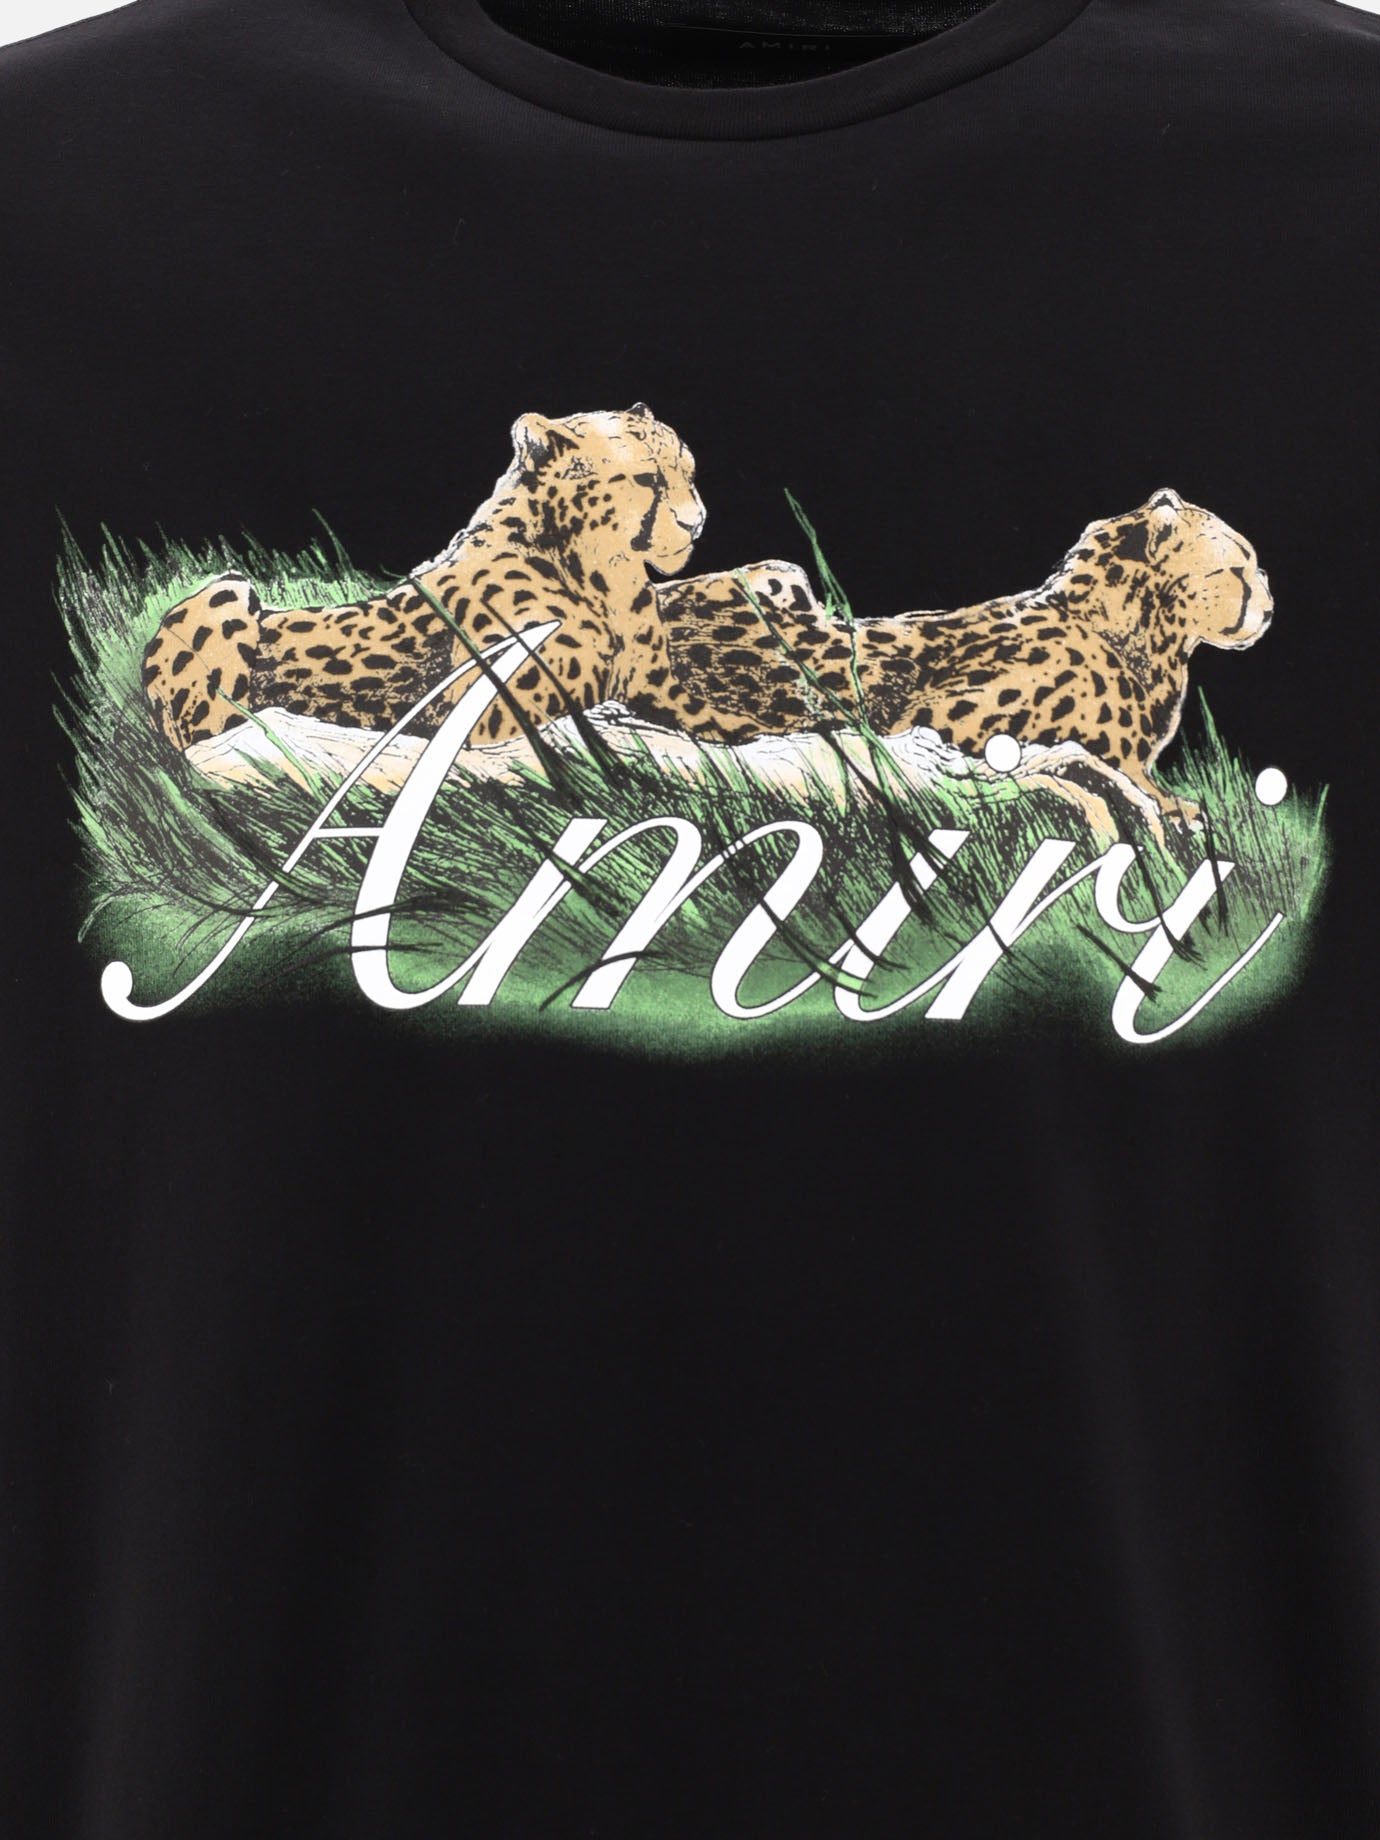 "Cheetah" t-shirt